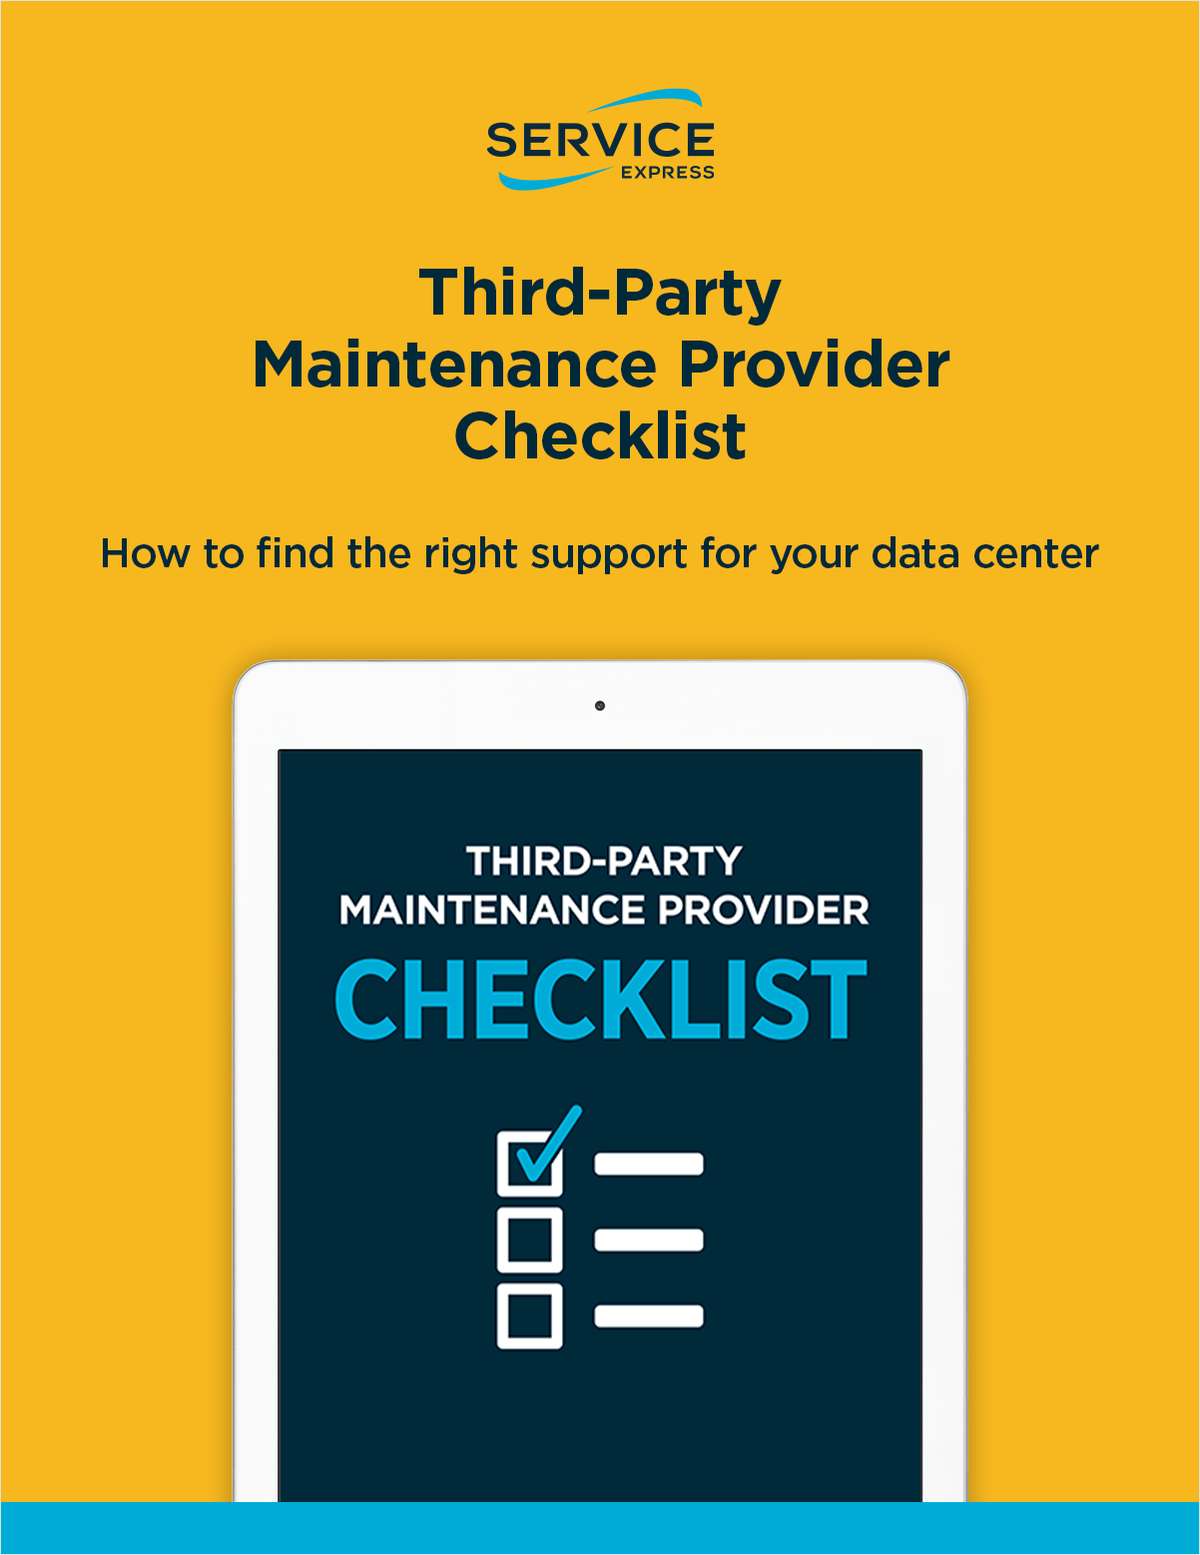 Third-Party Maintenance Provider Checklist